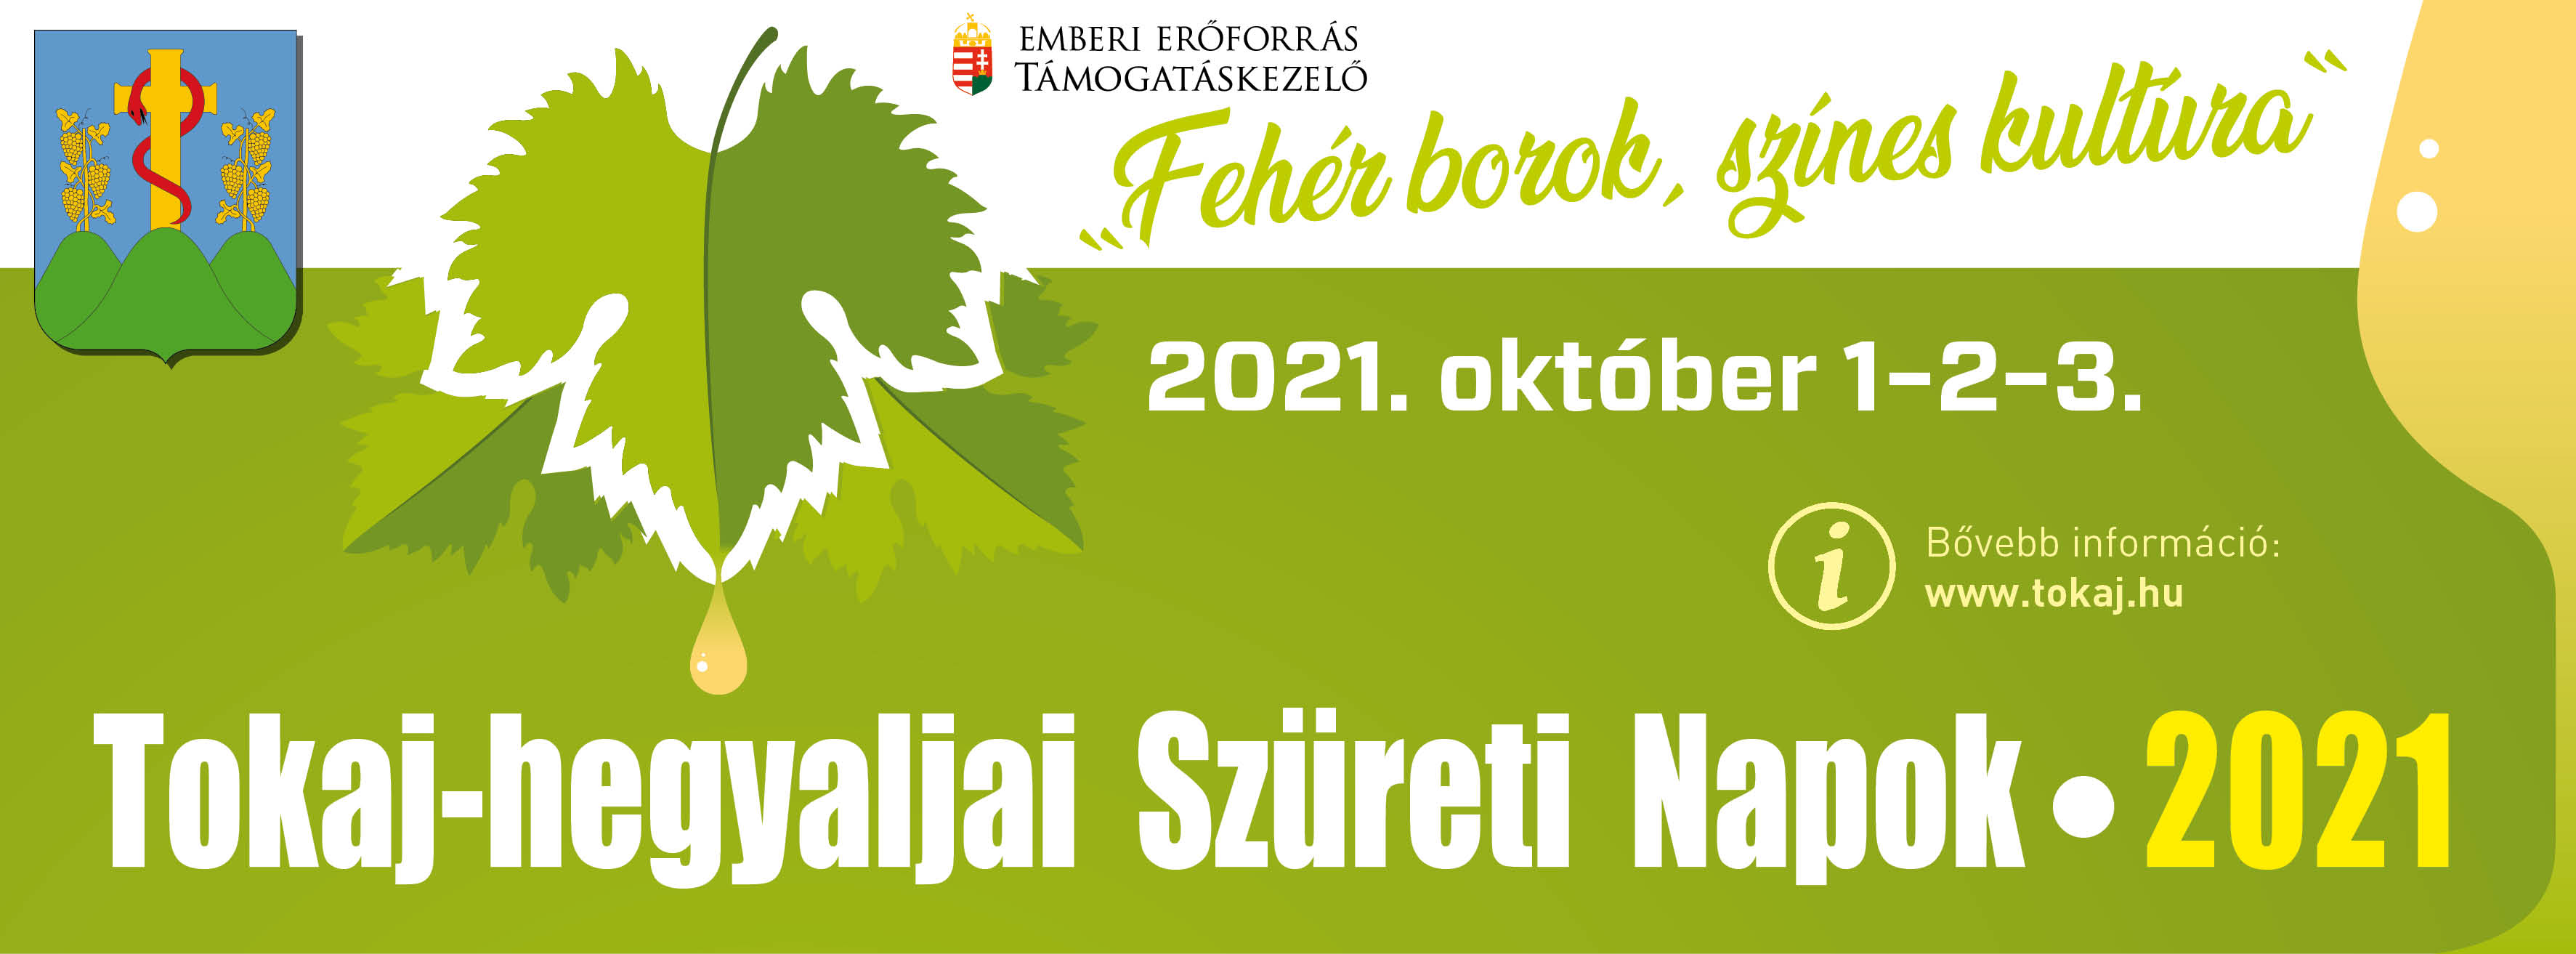 Tokaj-hegyaljai Szüreti Napok 2021. október 1-2-3.